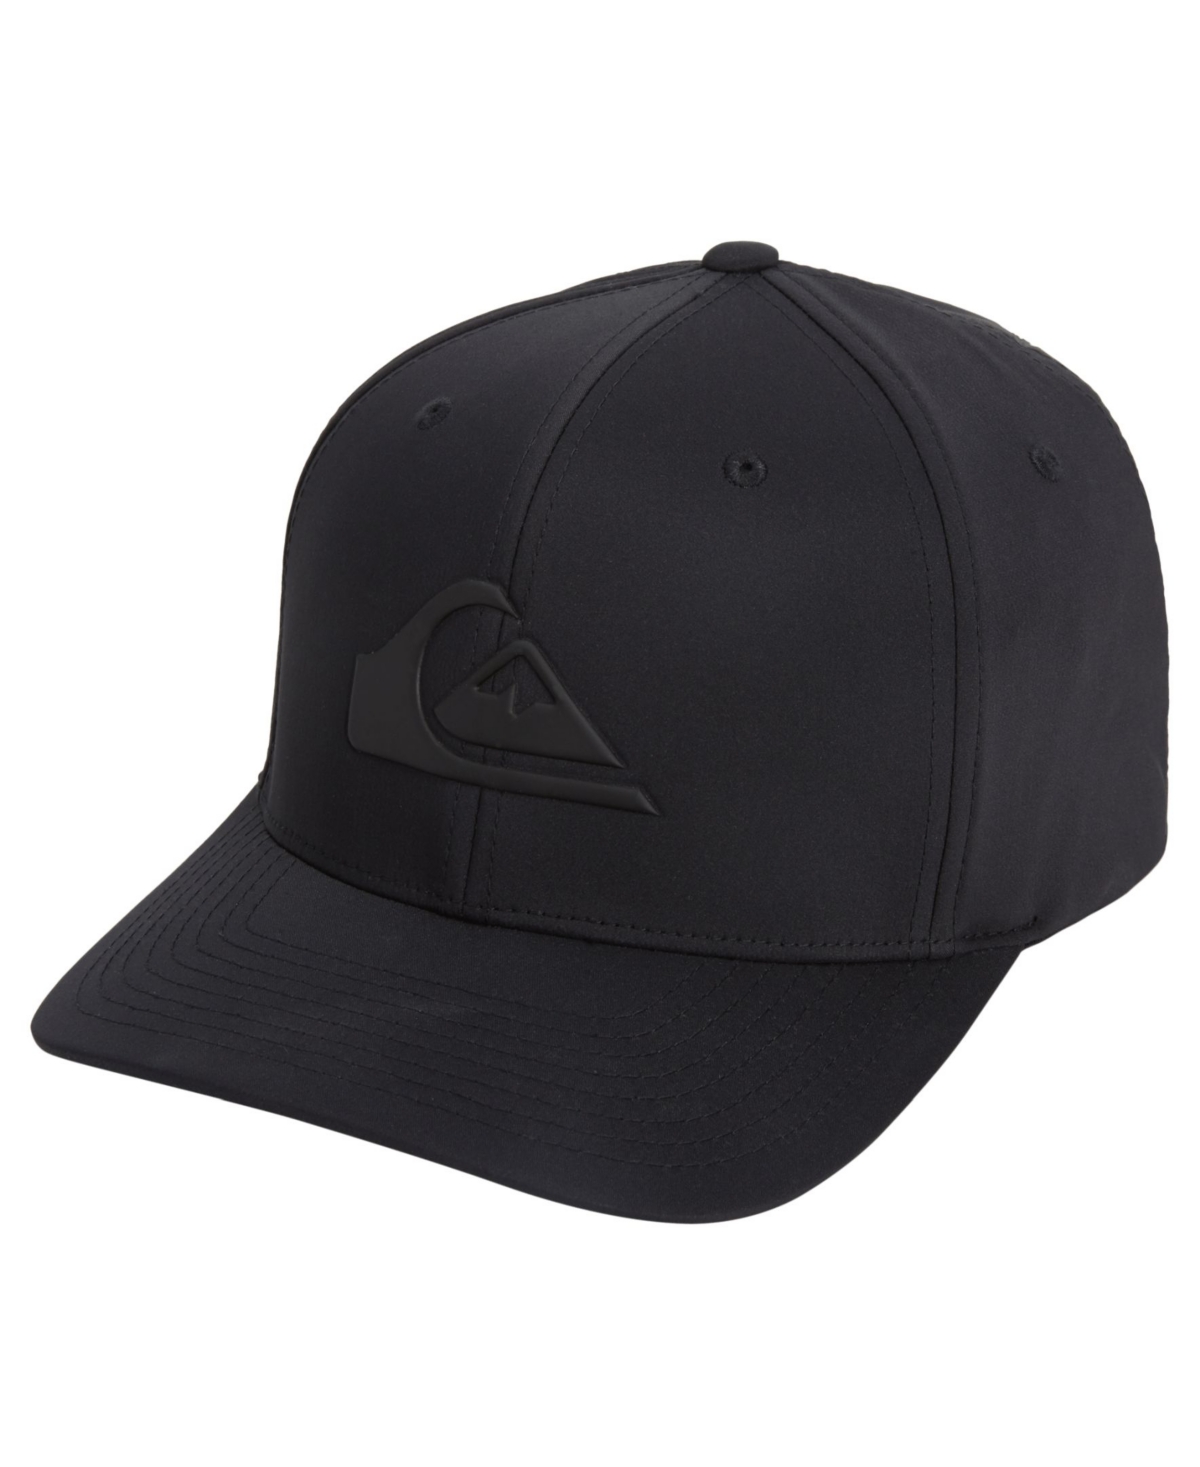 Men's Amped Up Flex fit Hat - Black